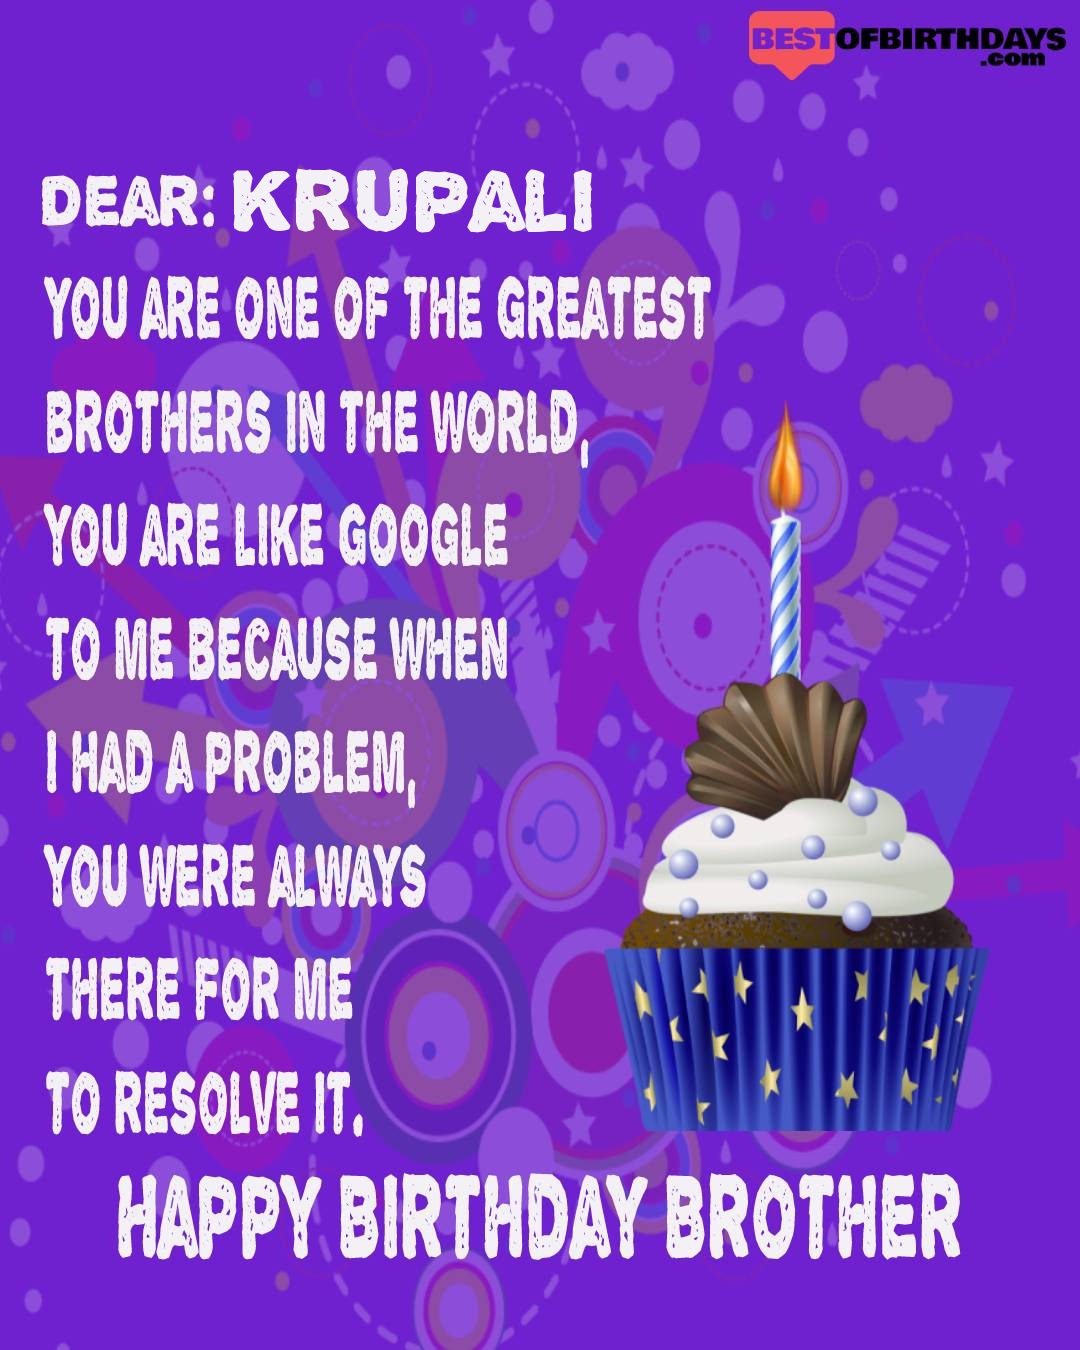 Happy birthday krupali bhai brother bro